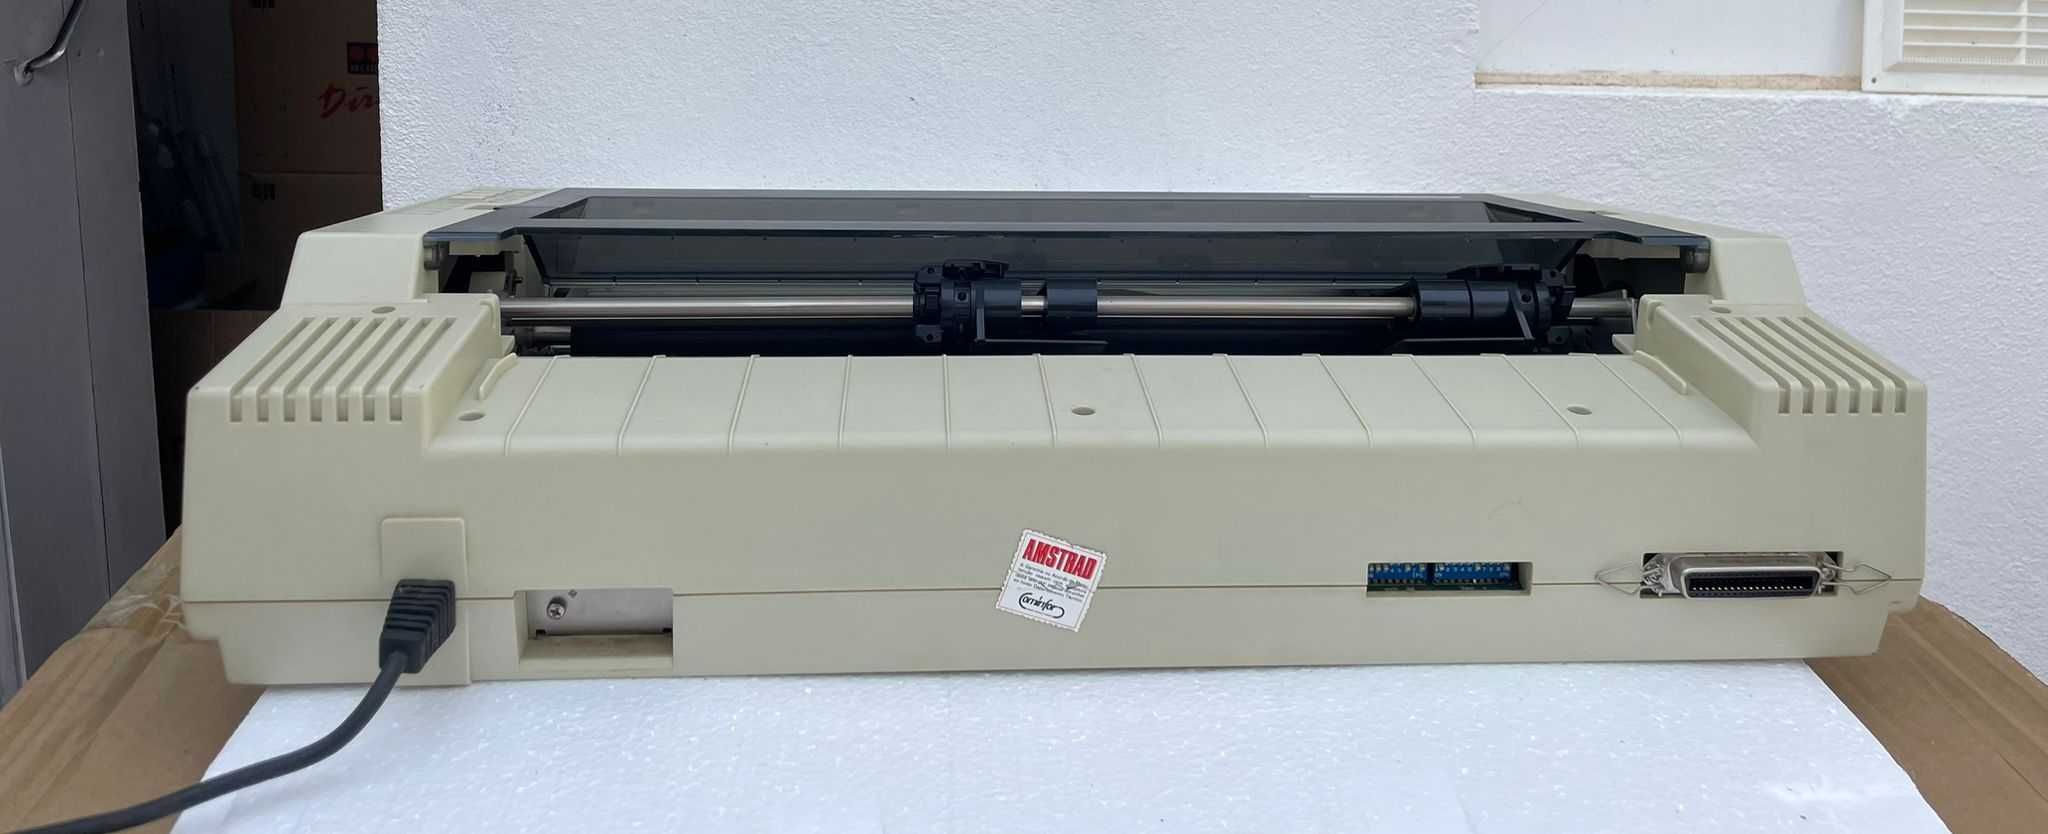 Amstrad DMP 4000